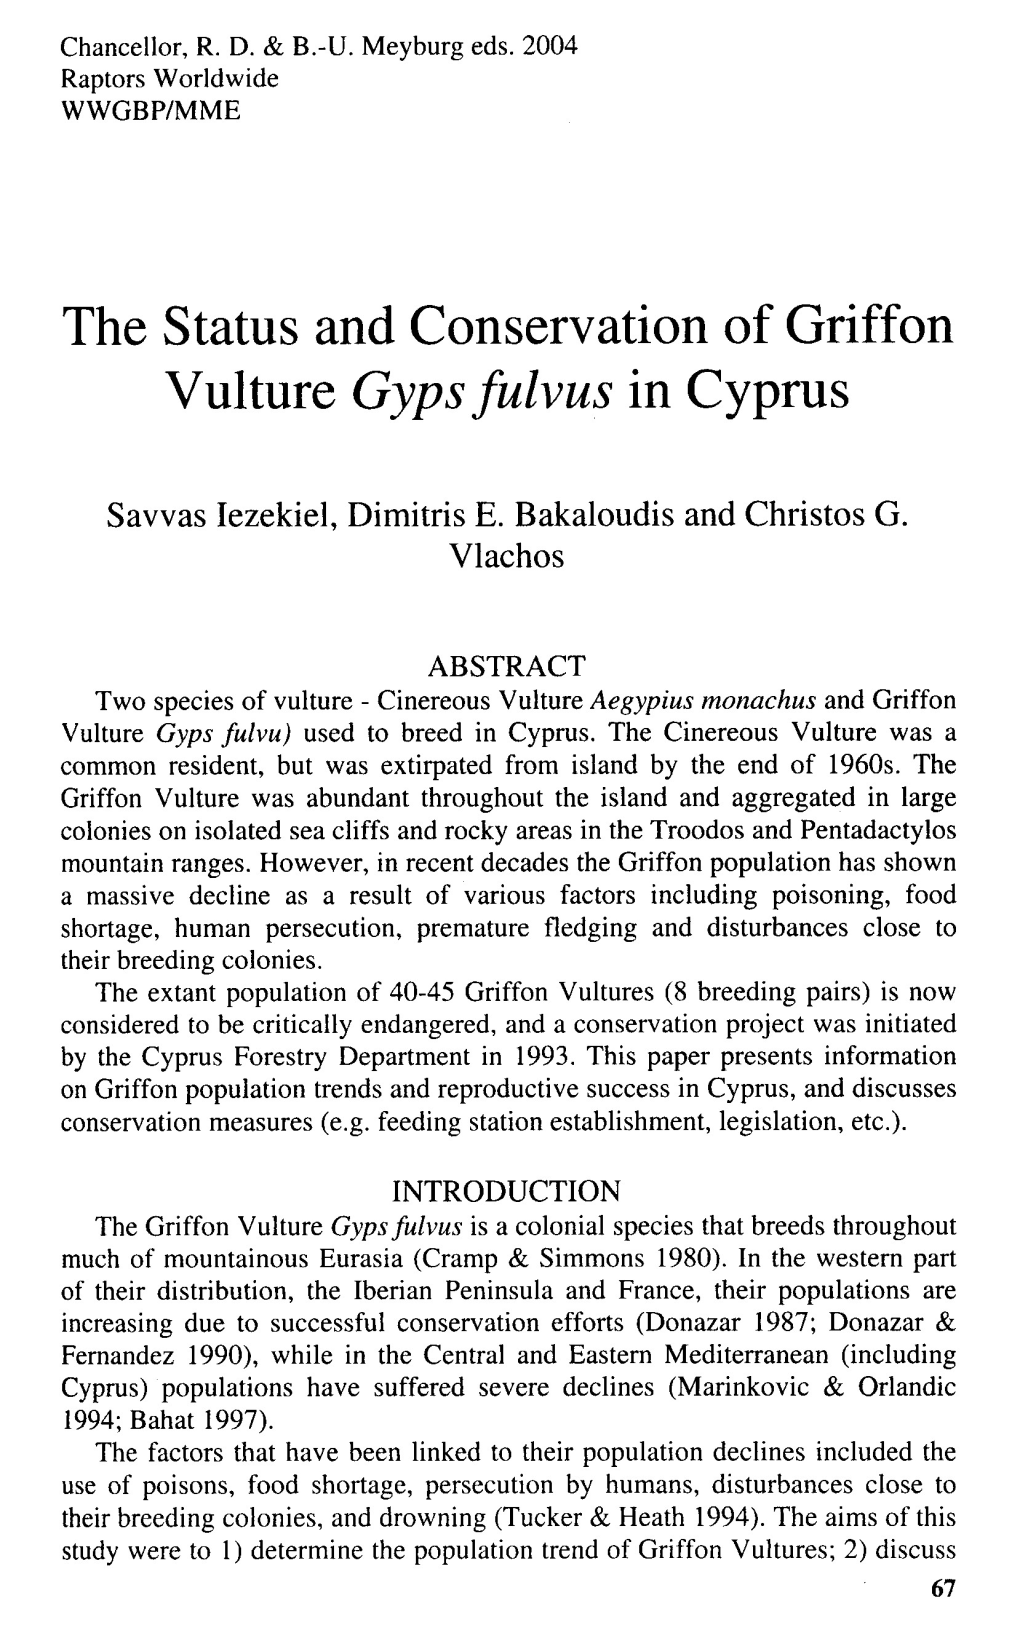 The Status and Conservation of Griffon Vulture Gypsfulvus in Cyprus Savvas Iezekiel, Dimitris E